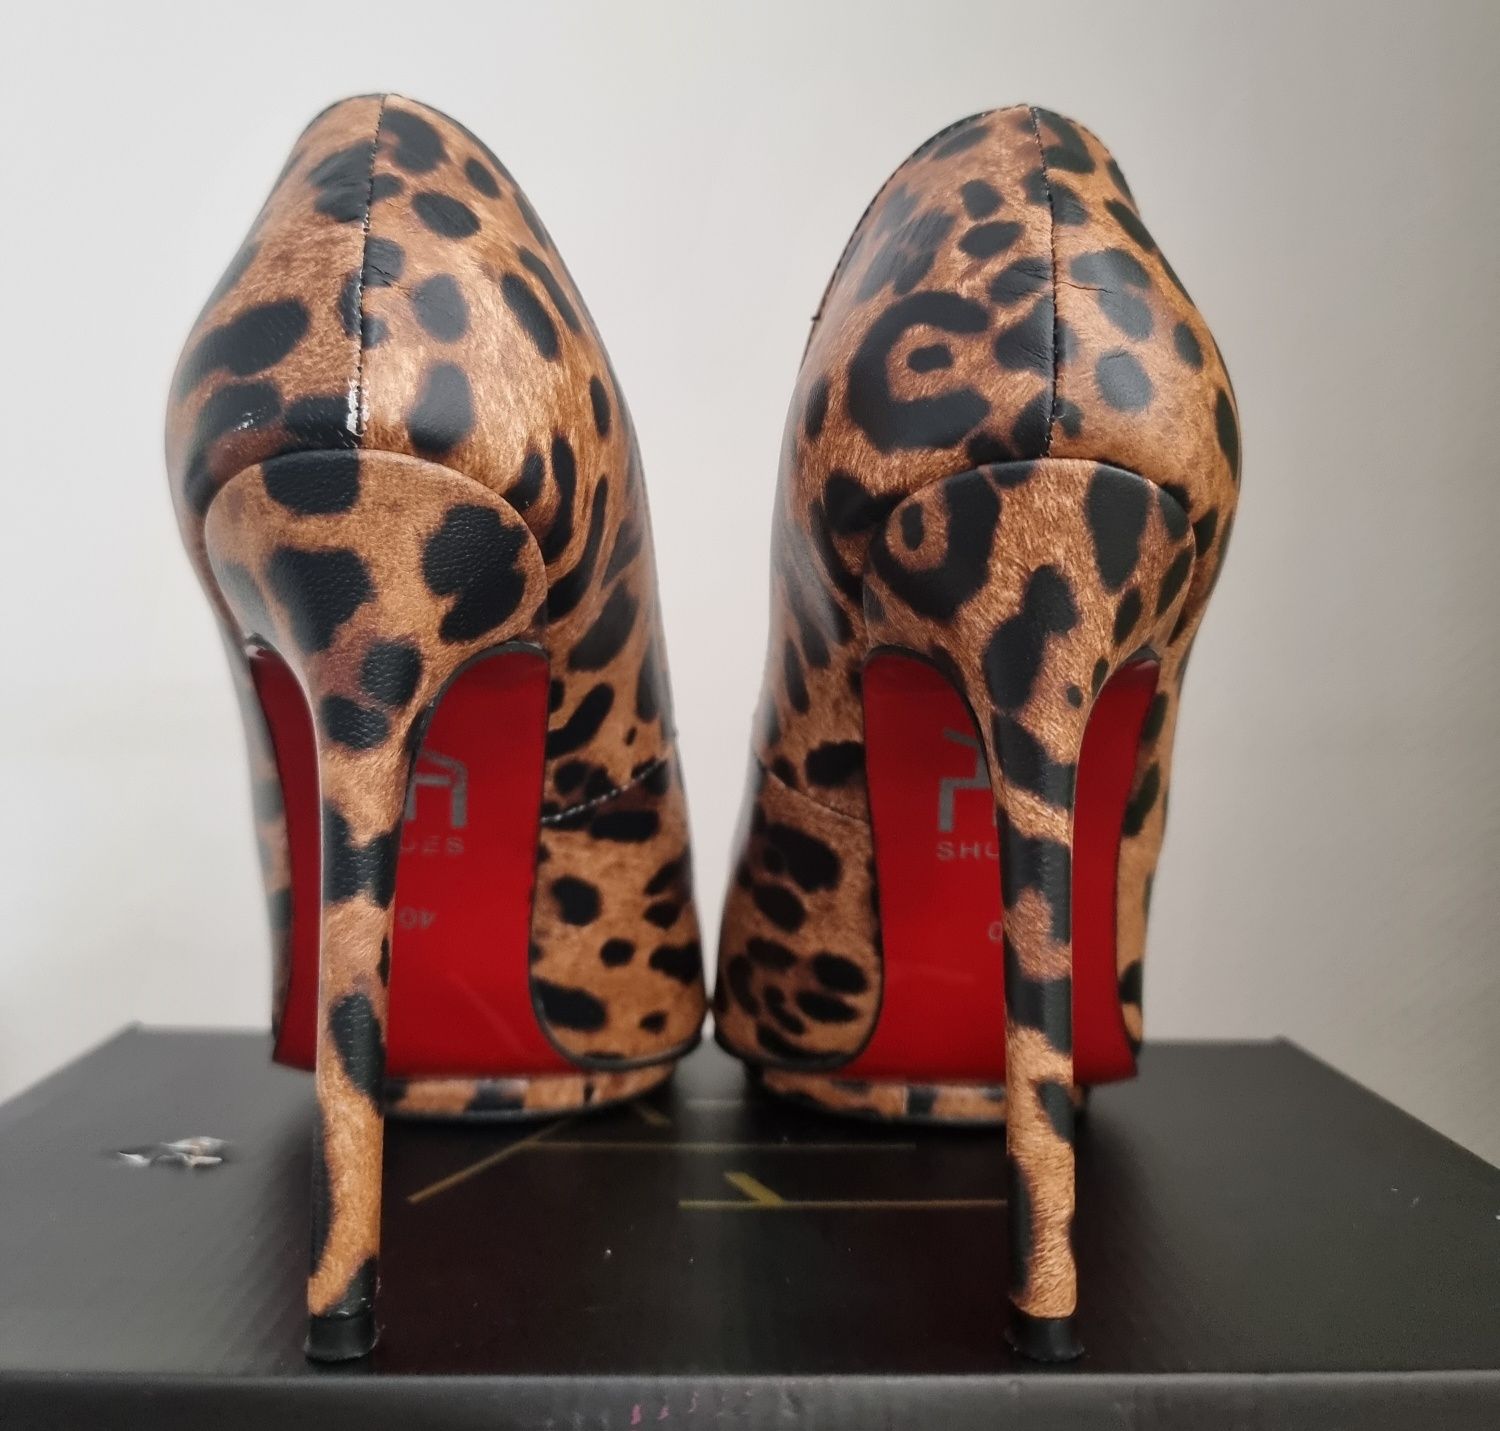 Pantofi stiletto piele leopard AE Shoes